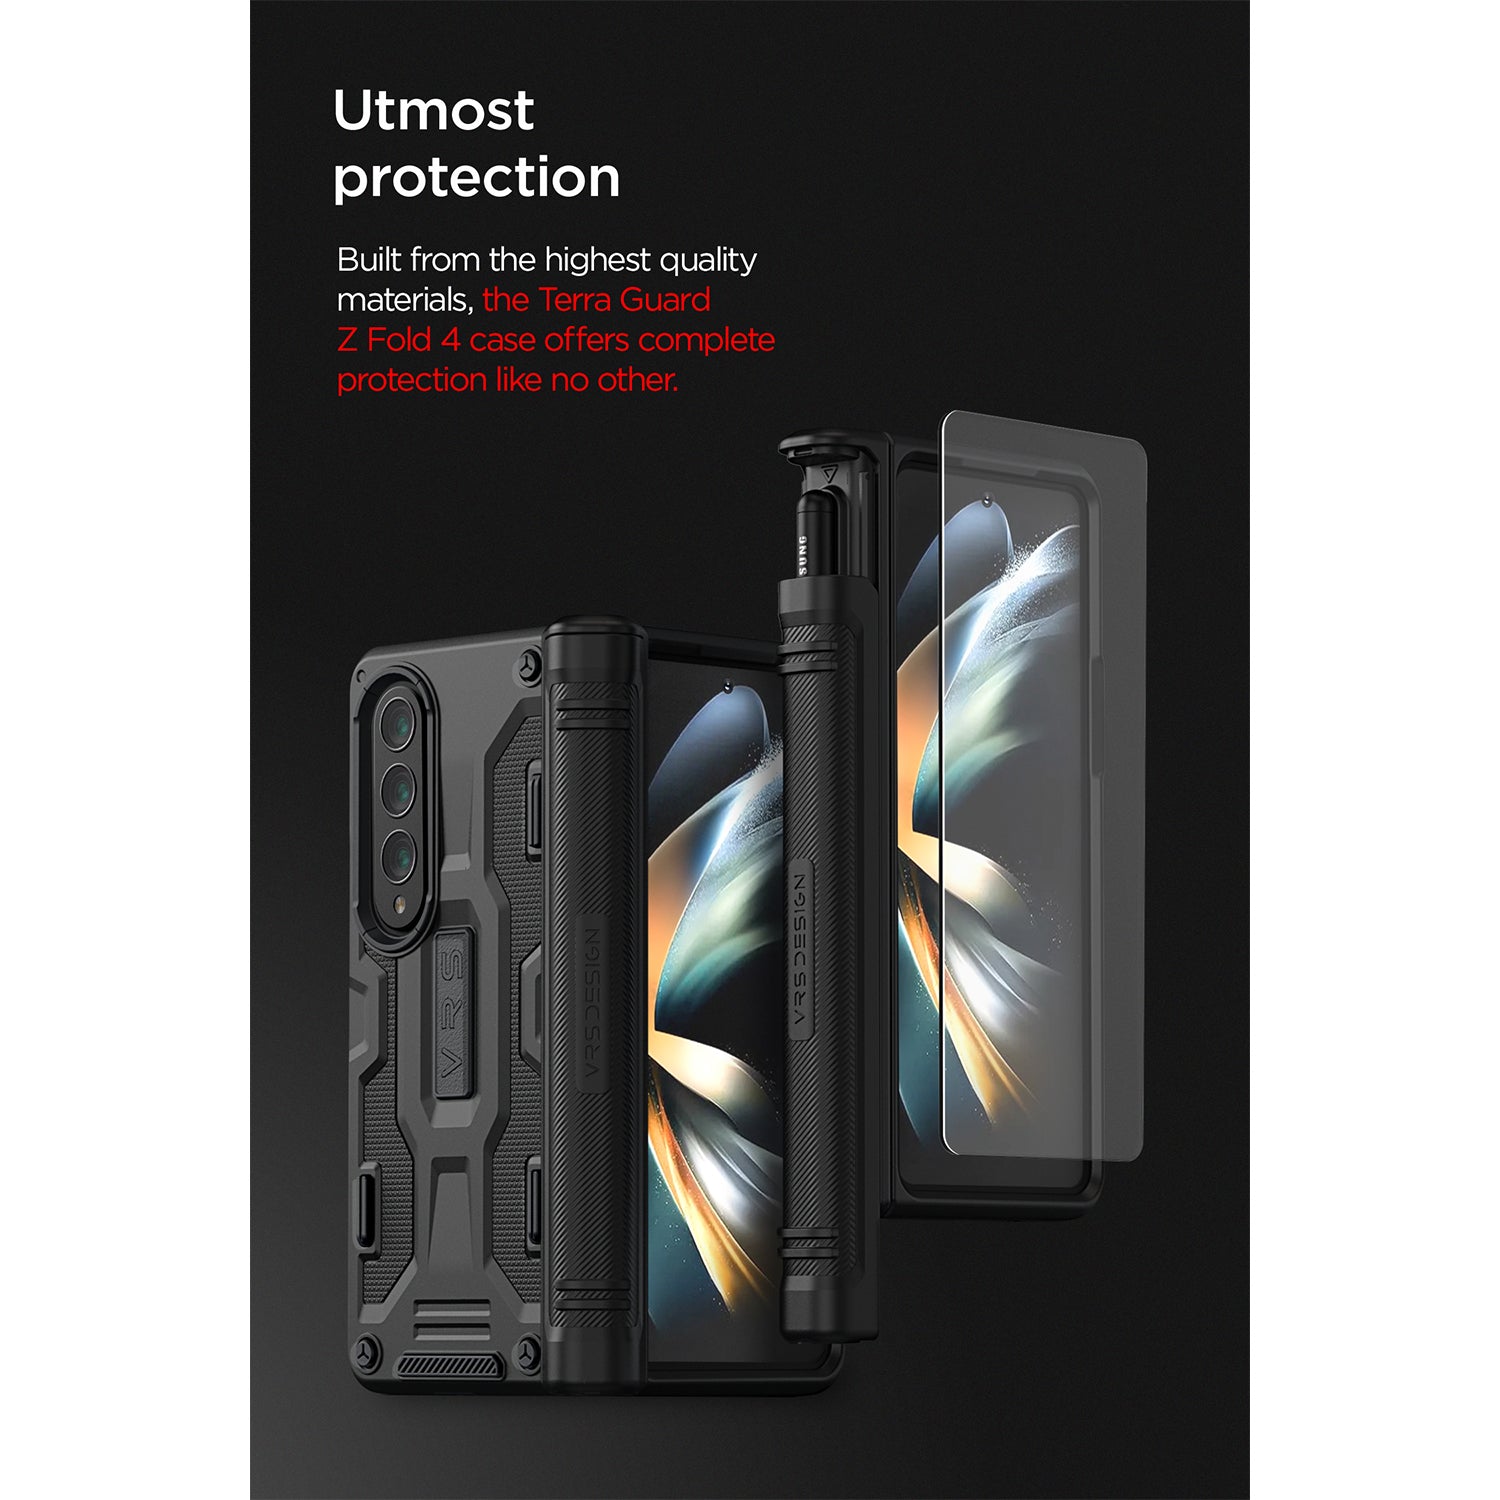 VRS Design Terra Guard Active S Case for Samsung Galaxy Z Fold 4 Samsung Case VRS Design 